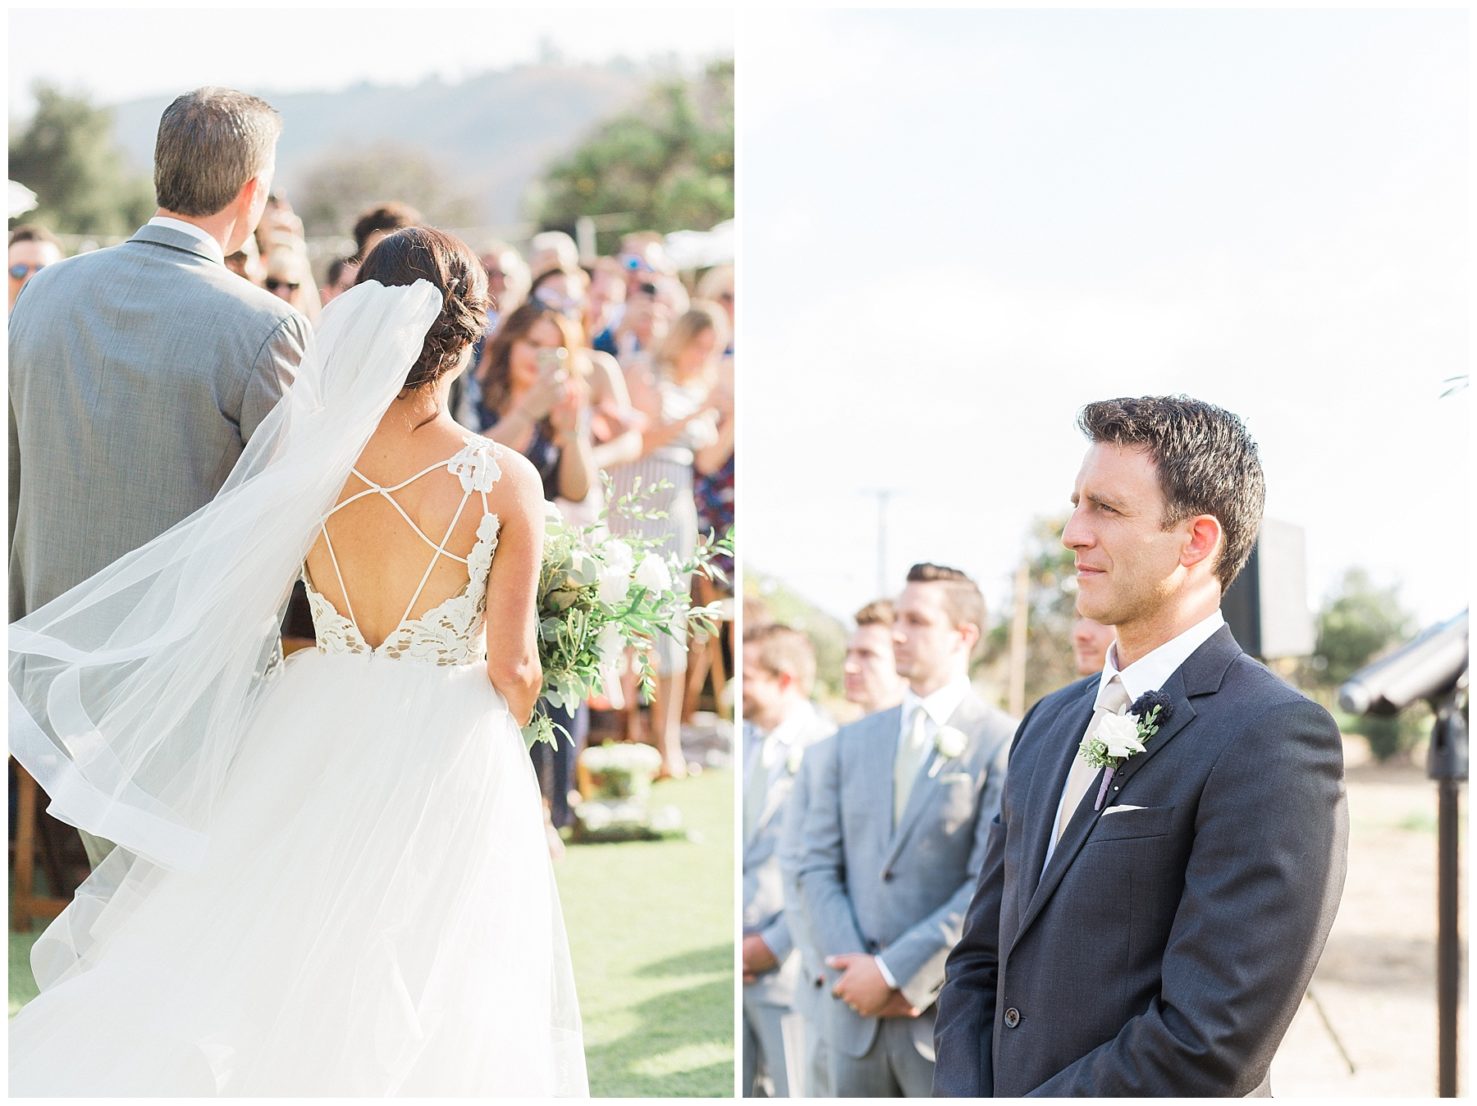 A Romantic Floral Inspired Summer Wedding in the open fields of Hamilton Oaks, San Juan Capistrano by Wedding Photographer Madison Ellis